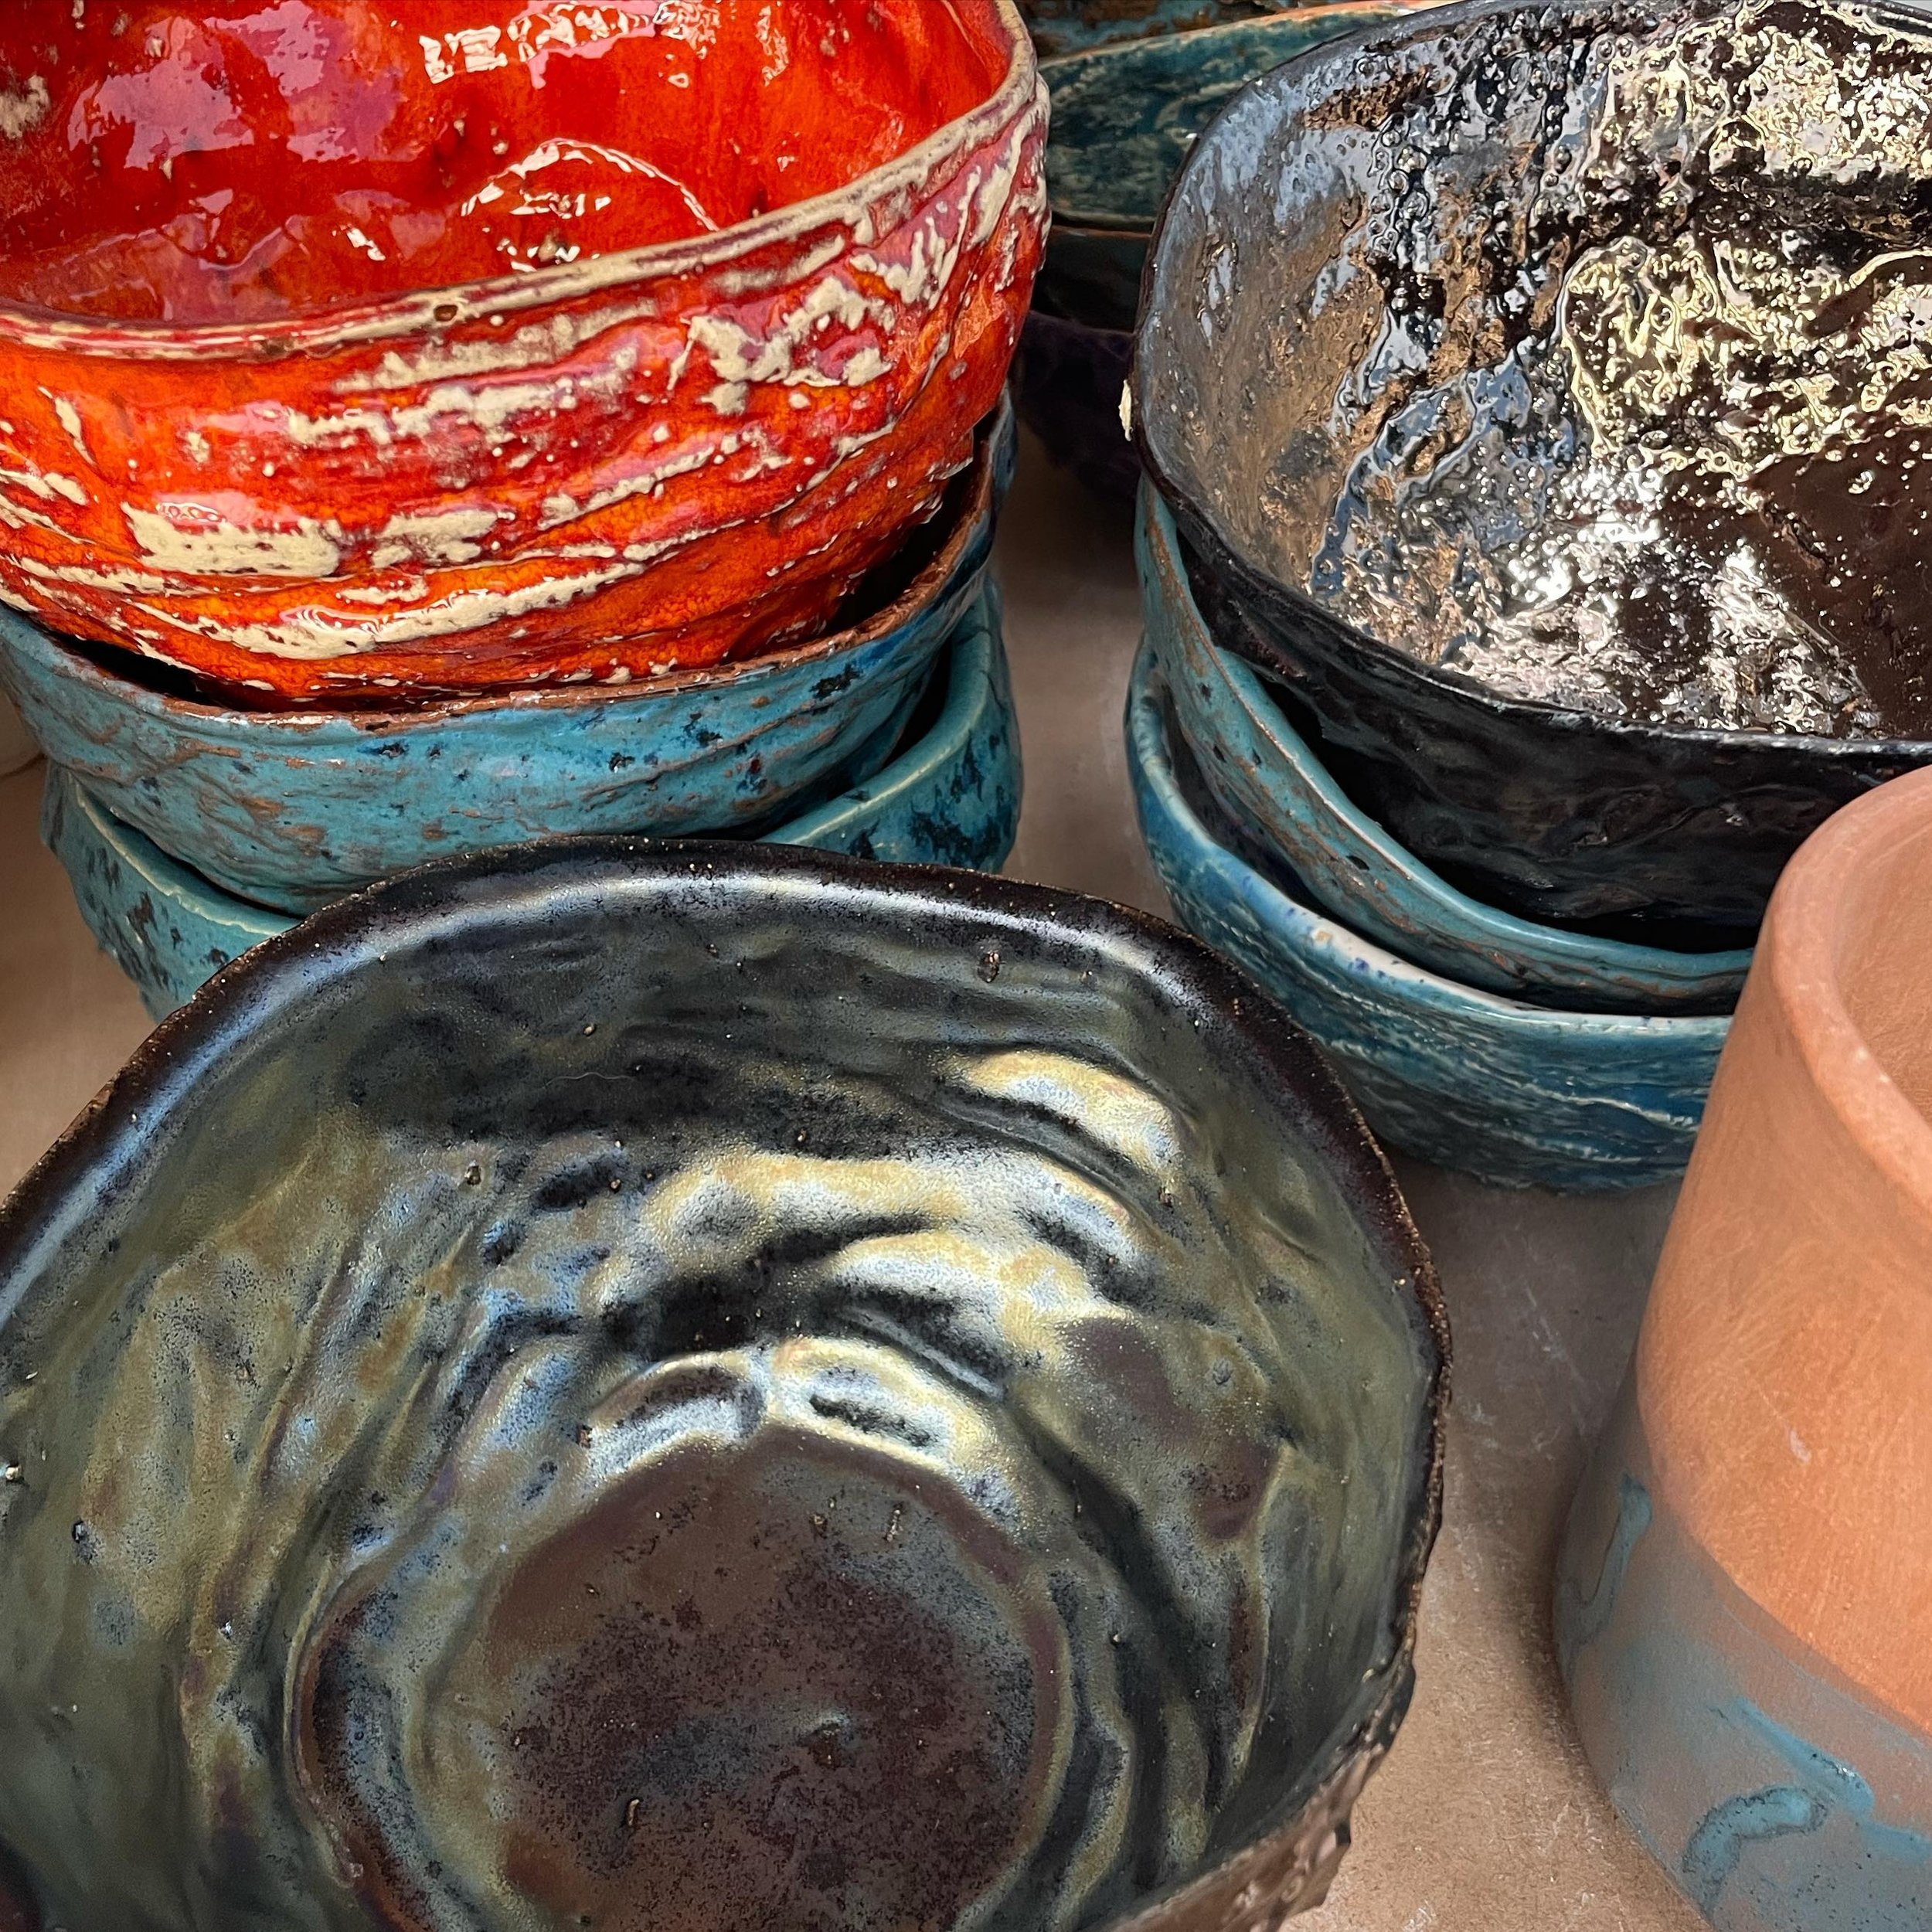 #glazingfun #productdevelopment #ceramics #pottery #fun 👌🎉